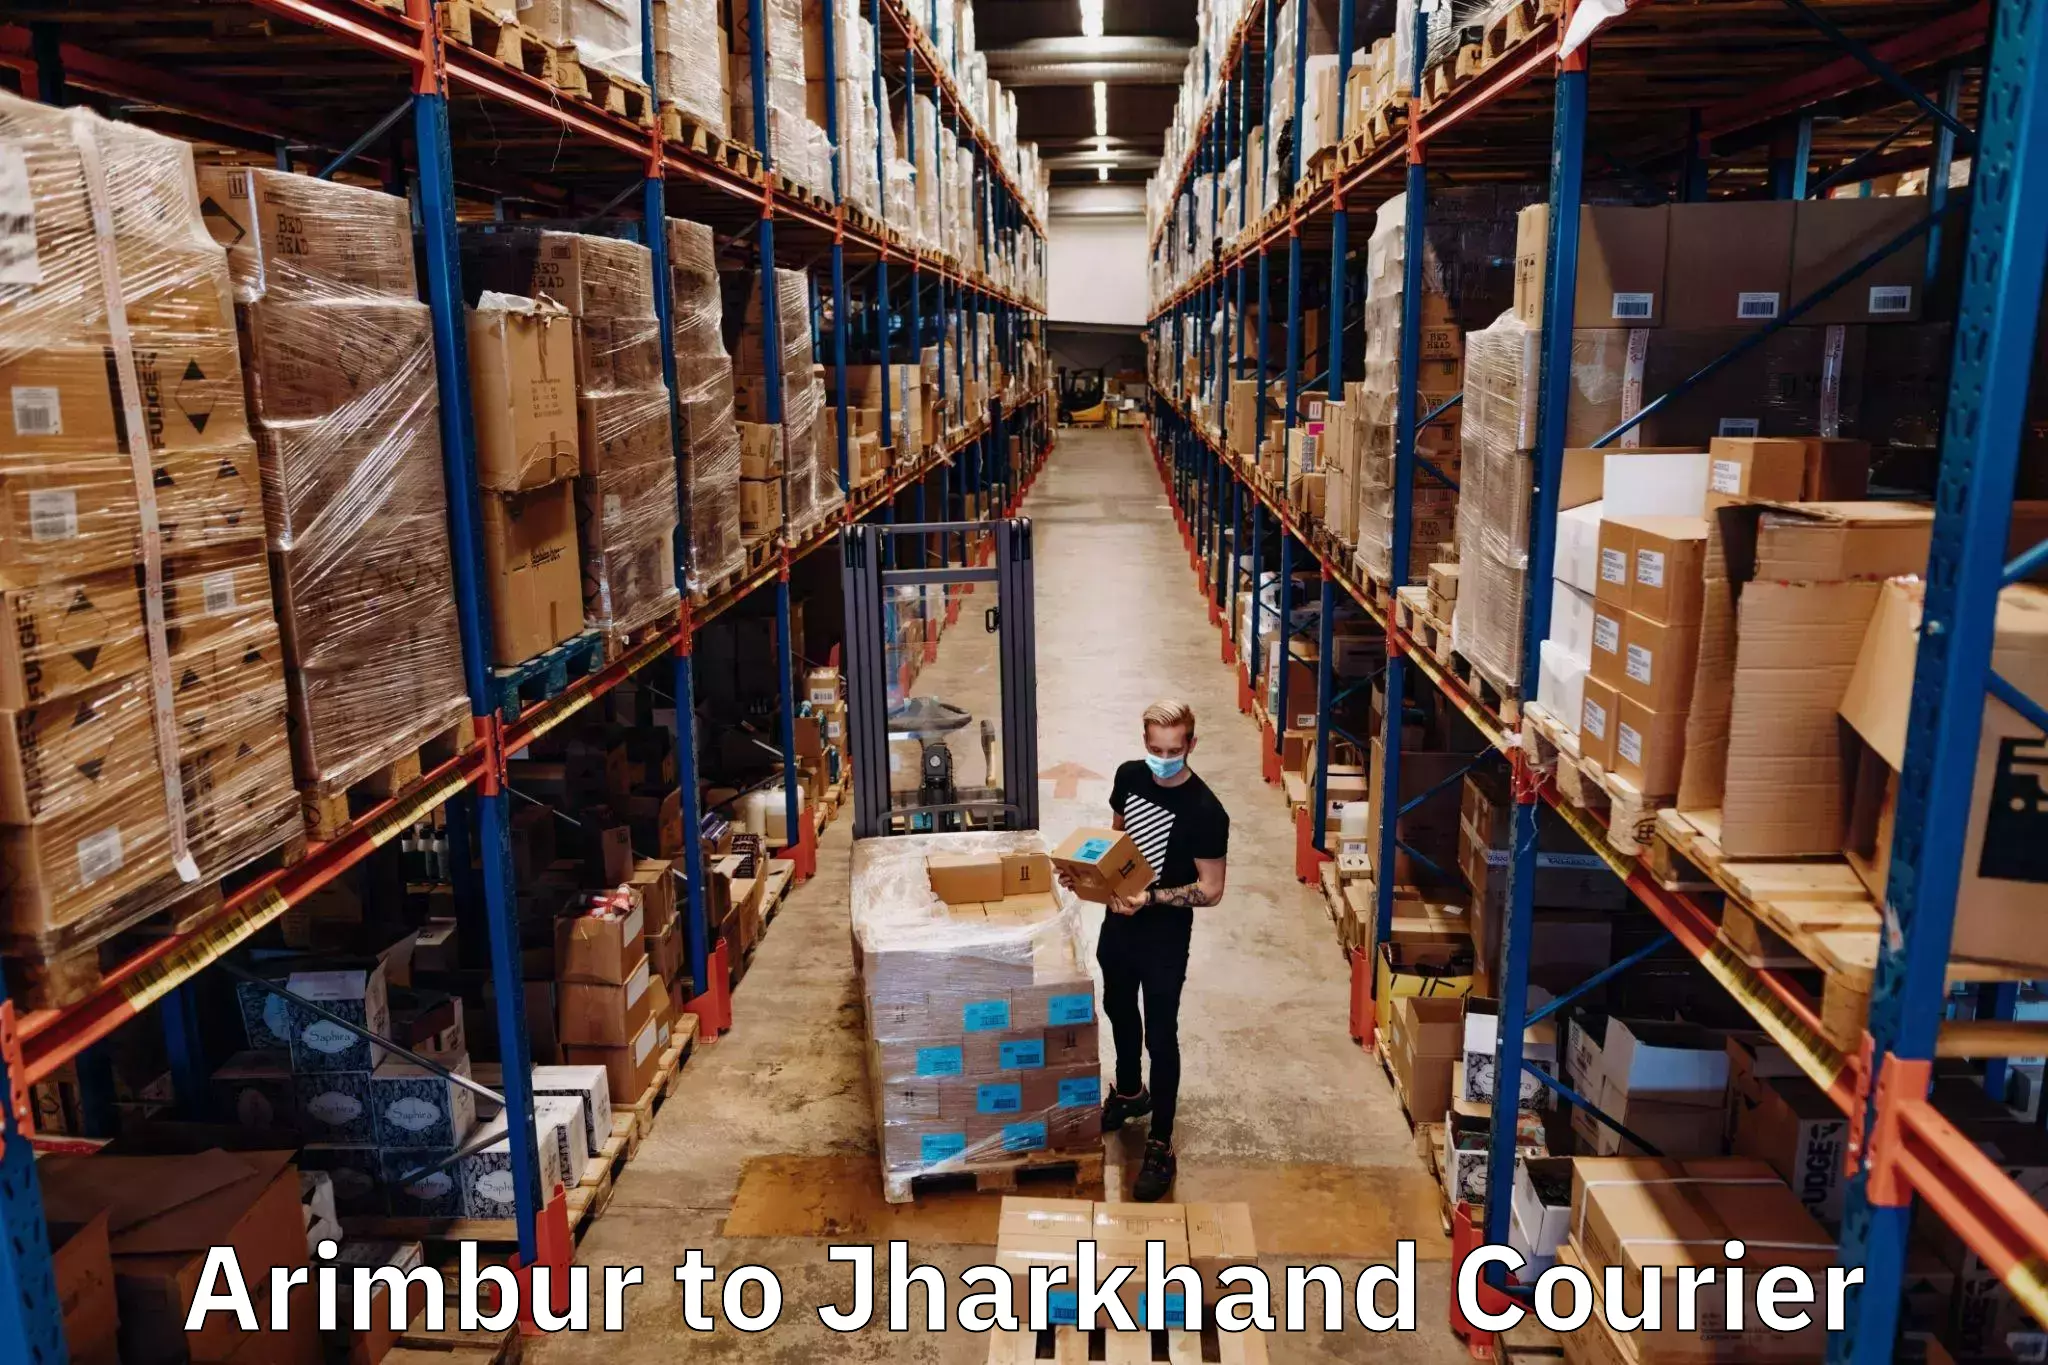 Courier service comparison Arimbur to Chakradharpur